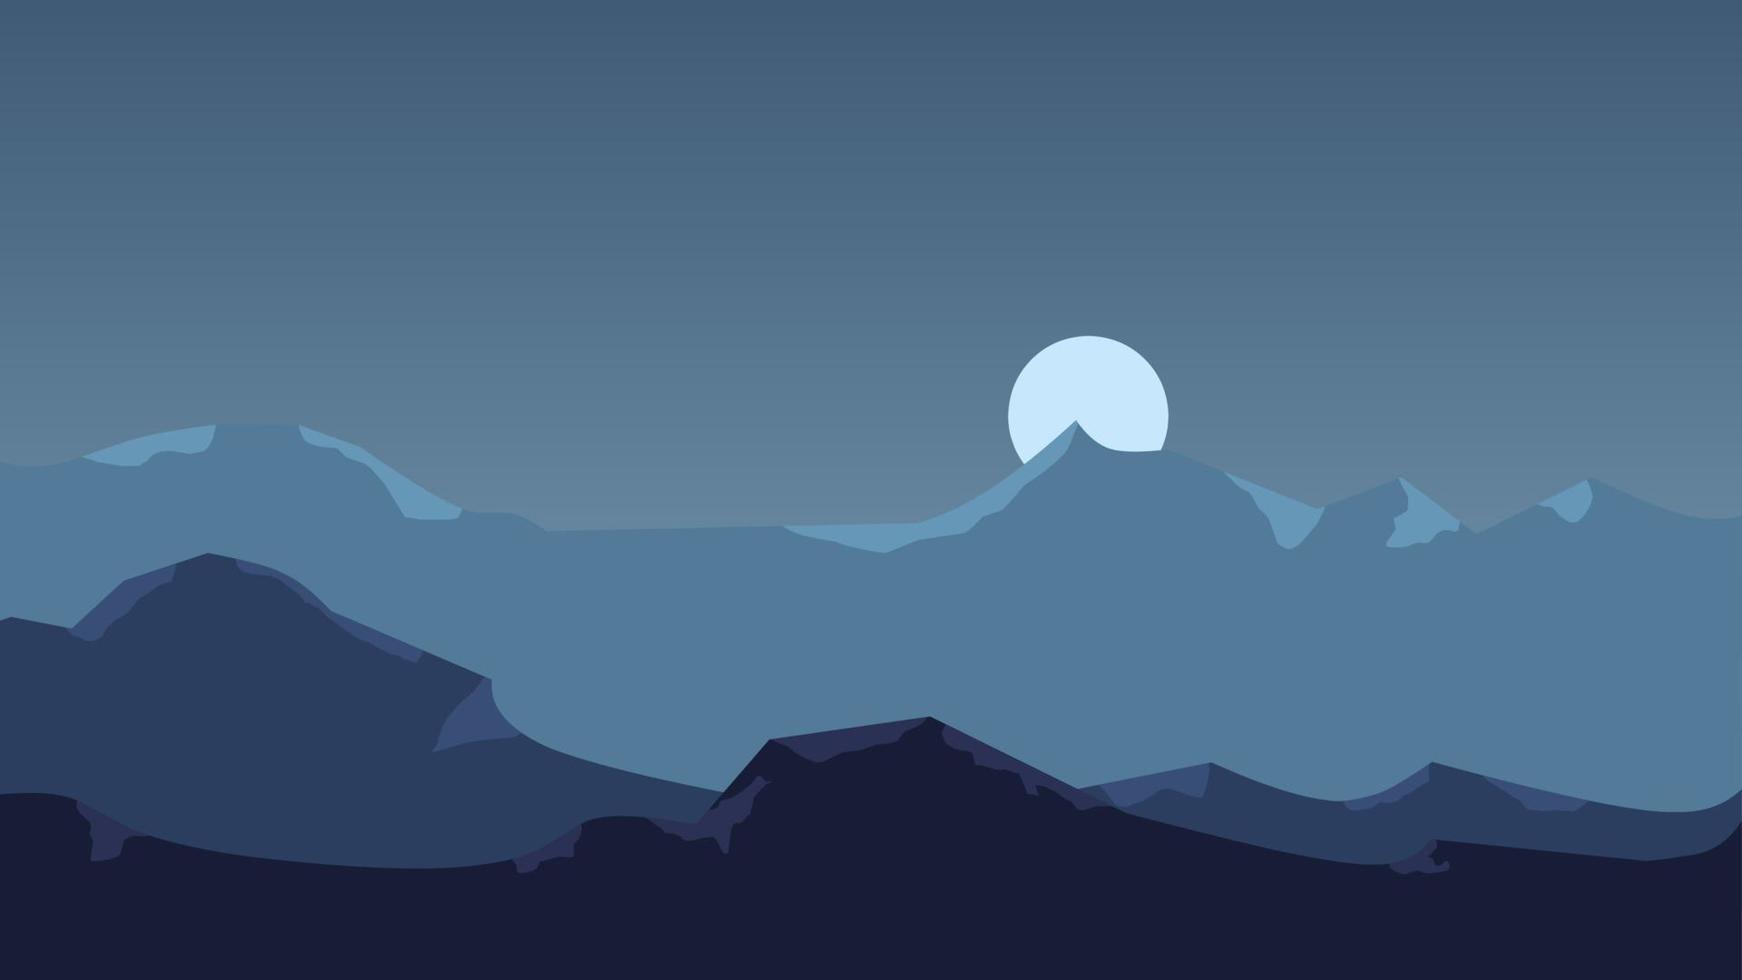 Moonlight mountain landscape vector